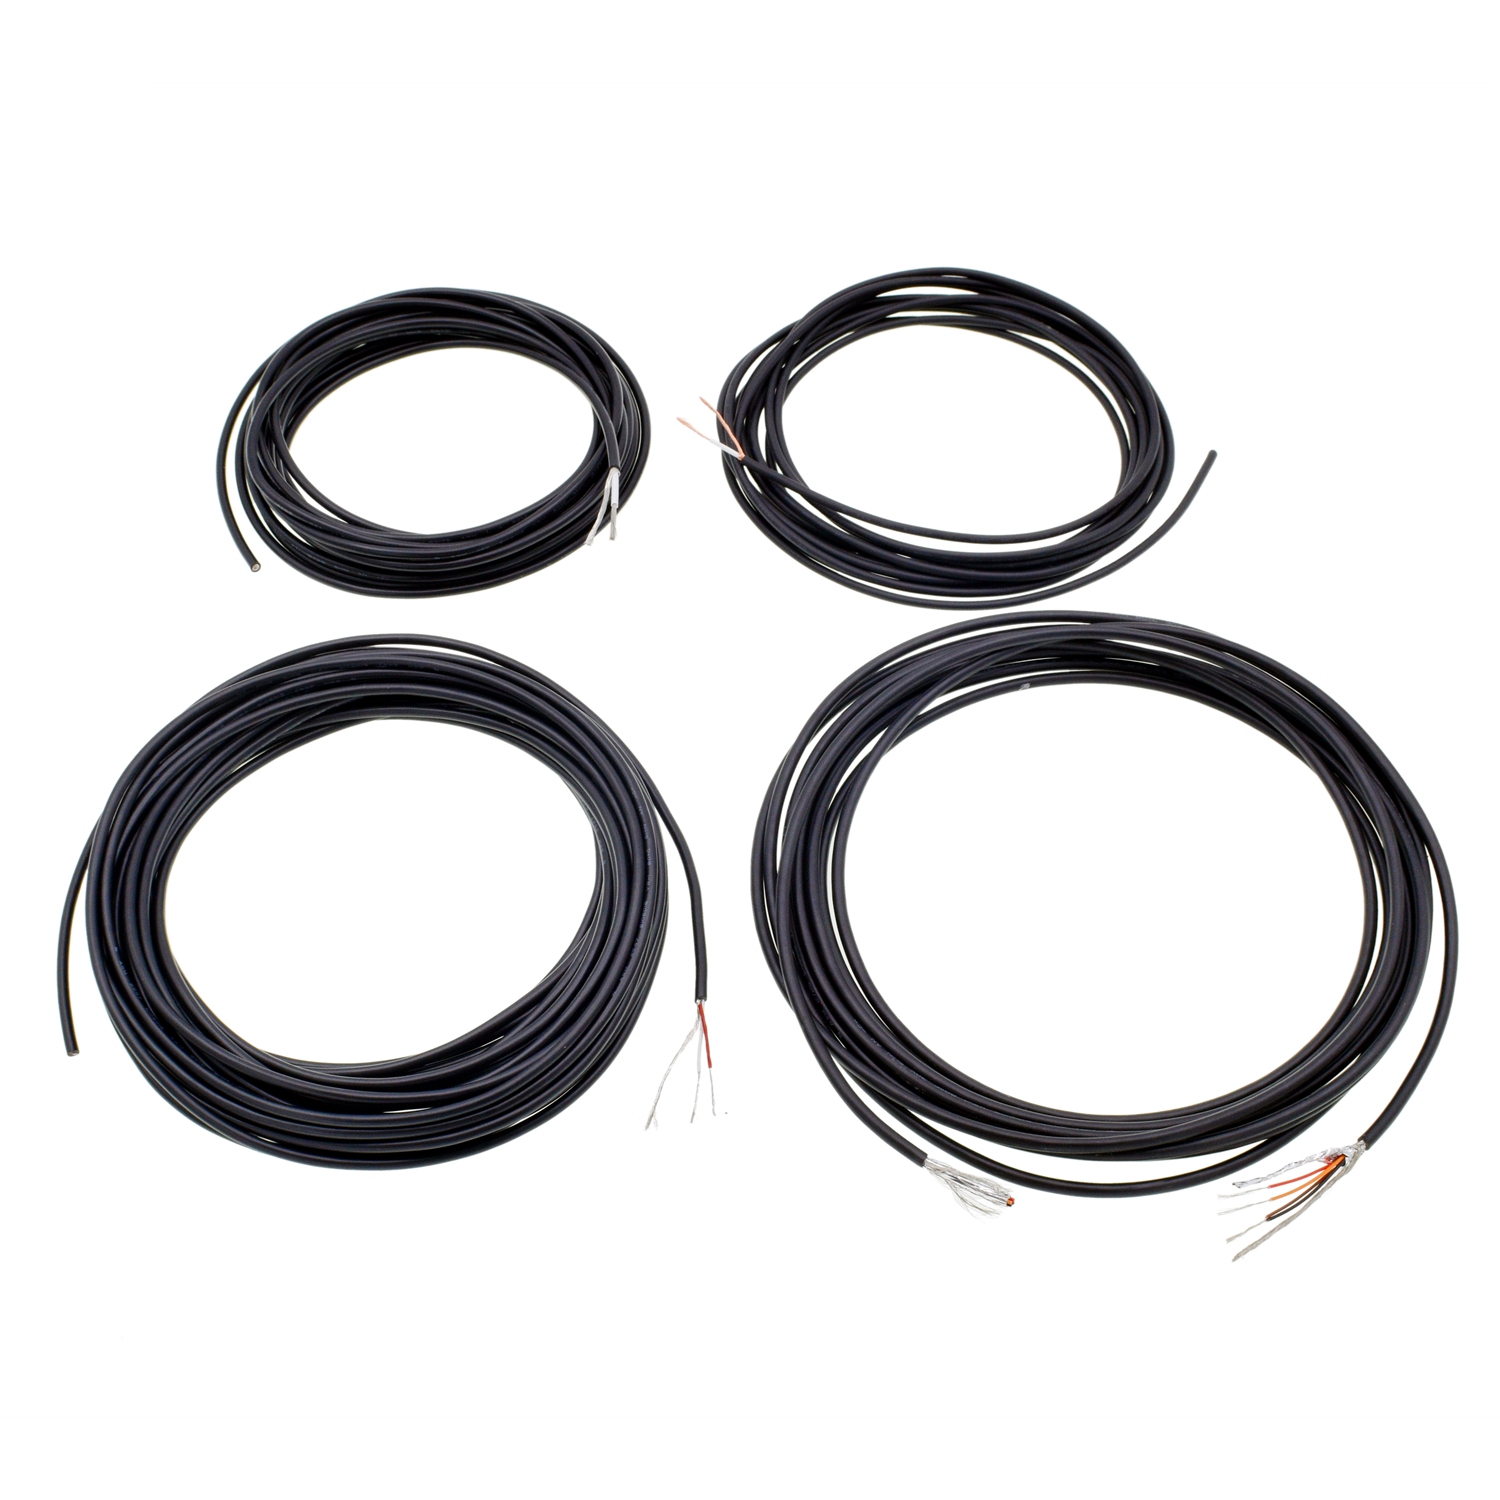 UL2464 Black / Grey PVC Jacket Shielded Cable 20/22 / 24AWG AWM